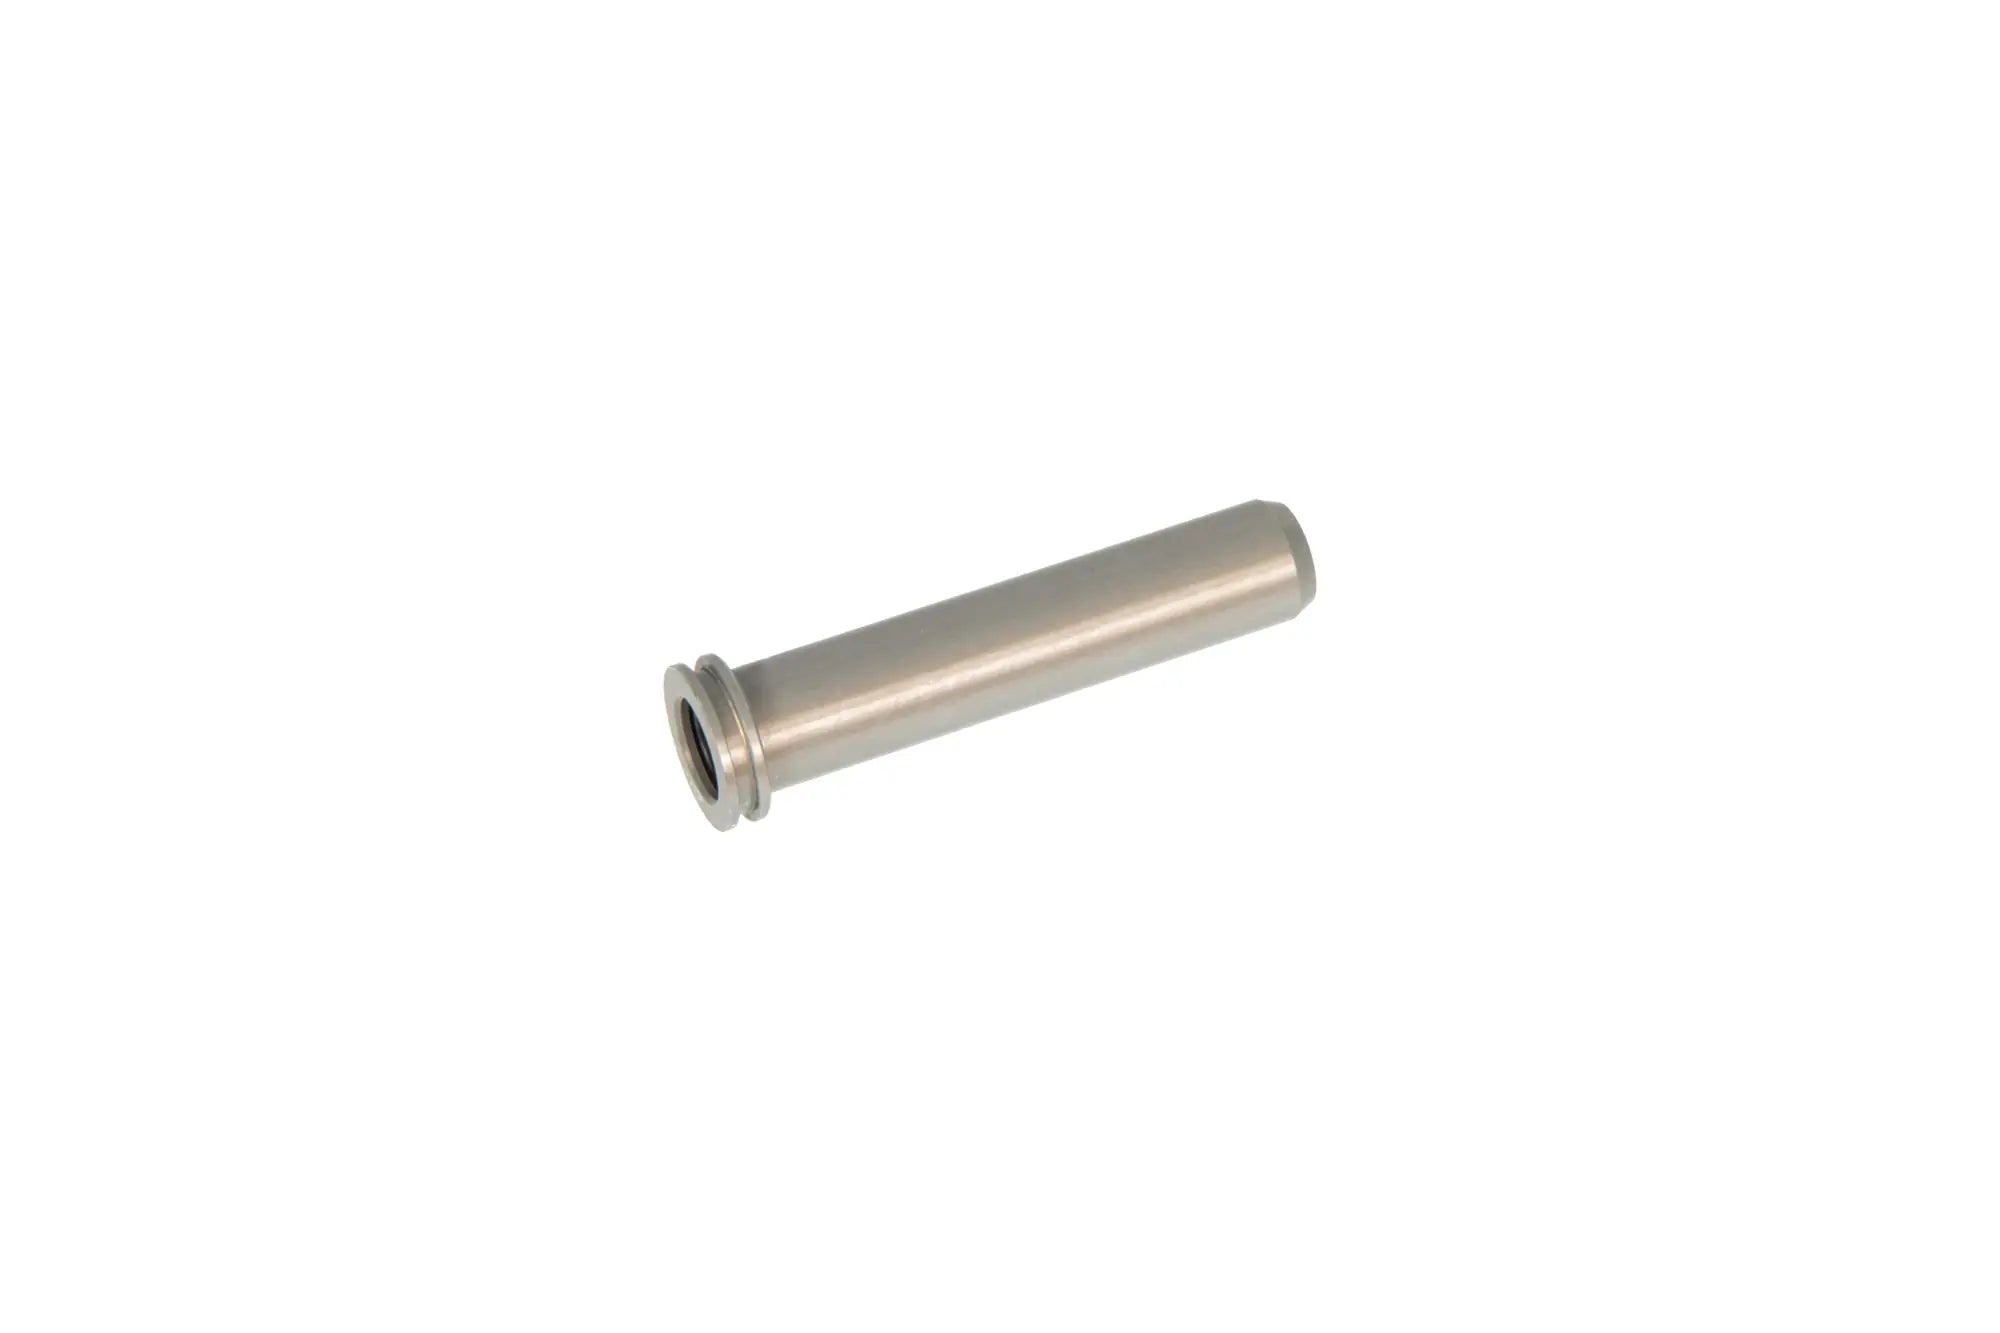 Standard nozzle for CZ Bren AEG replicas (34,1 mm.)-2